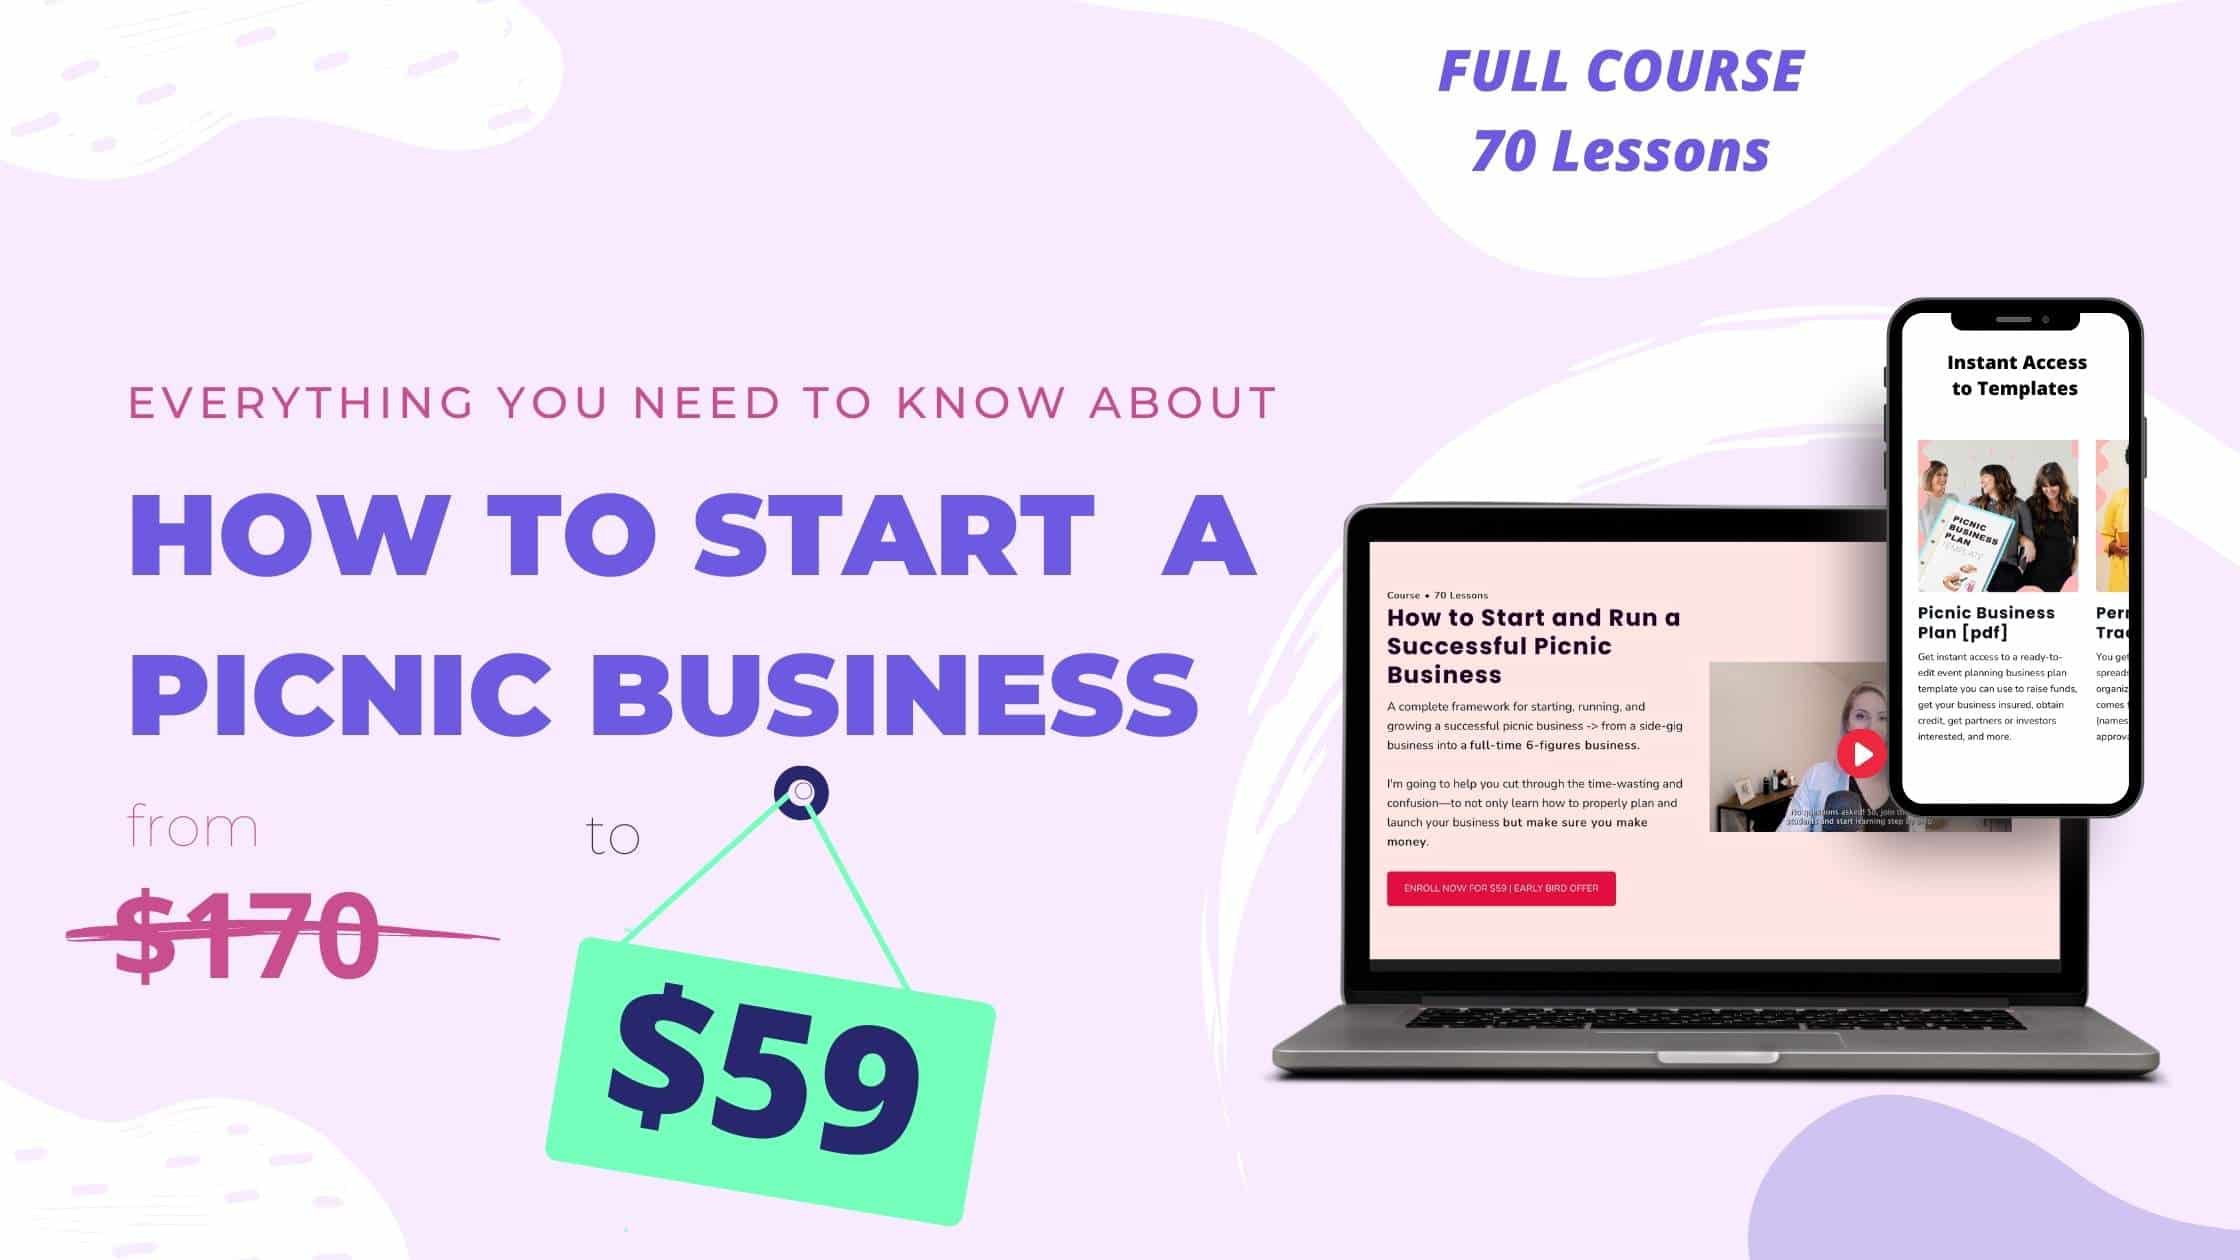 Picnic business course